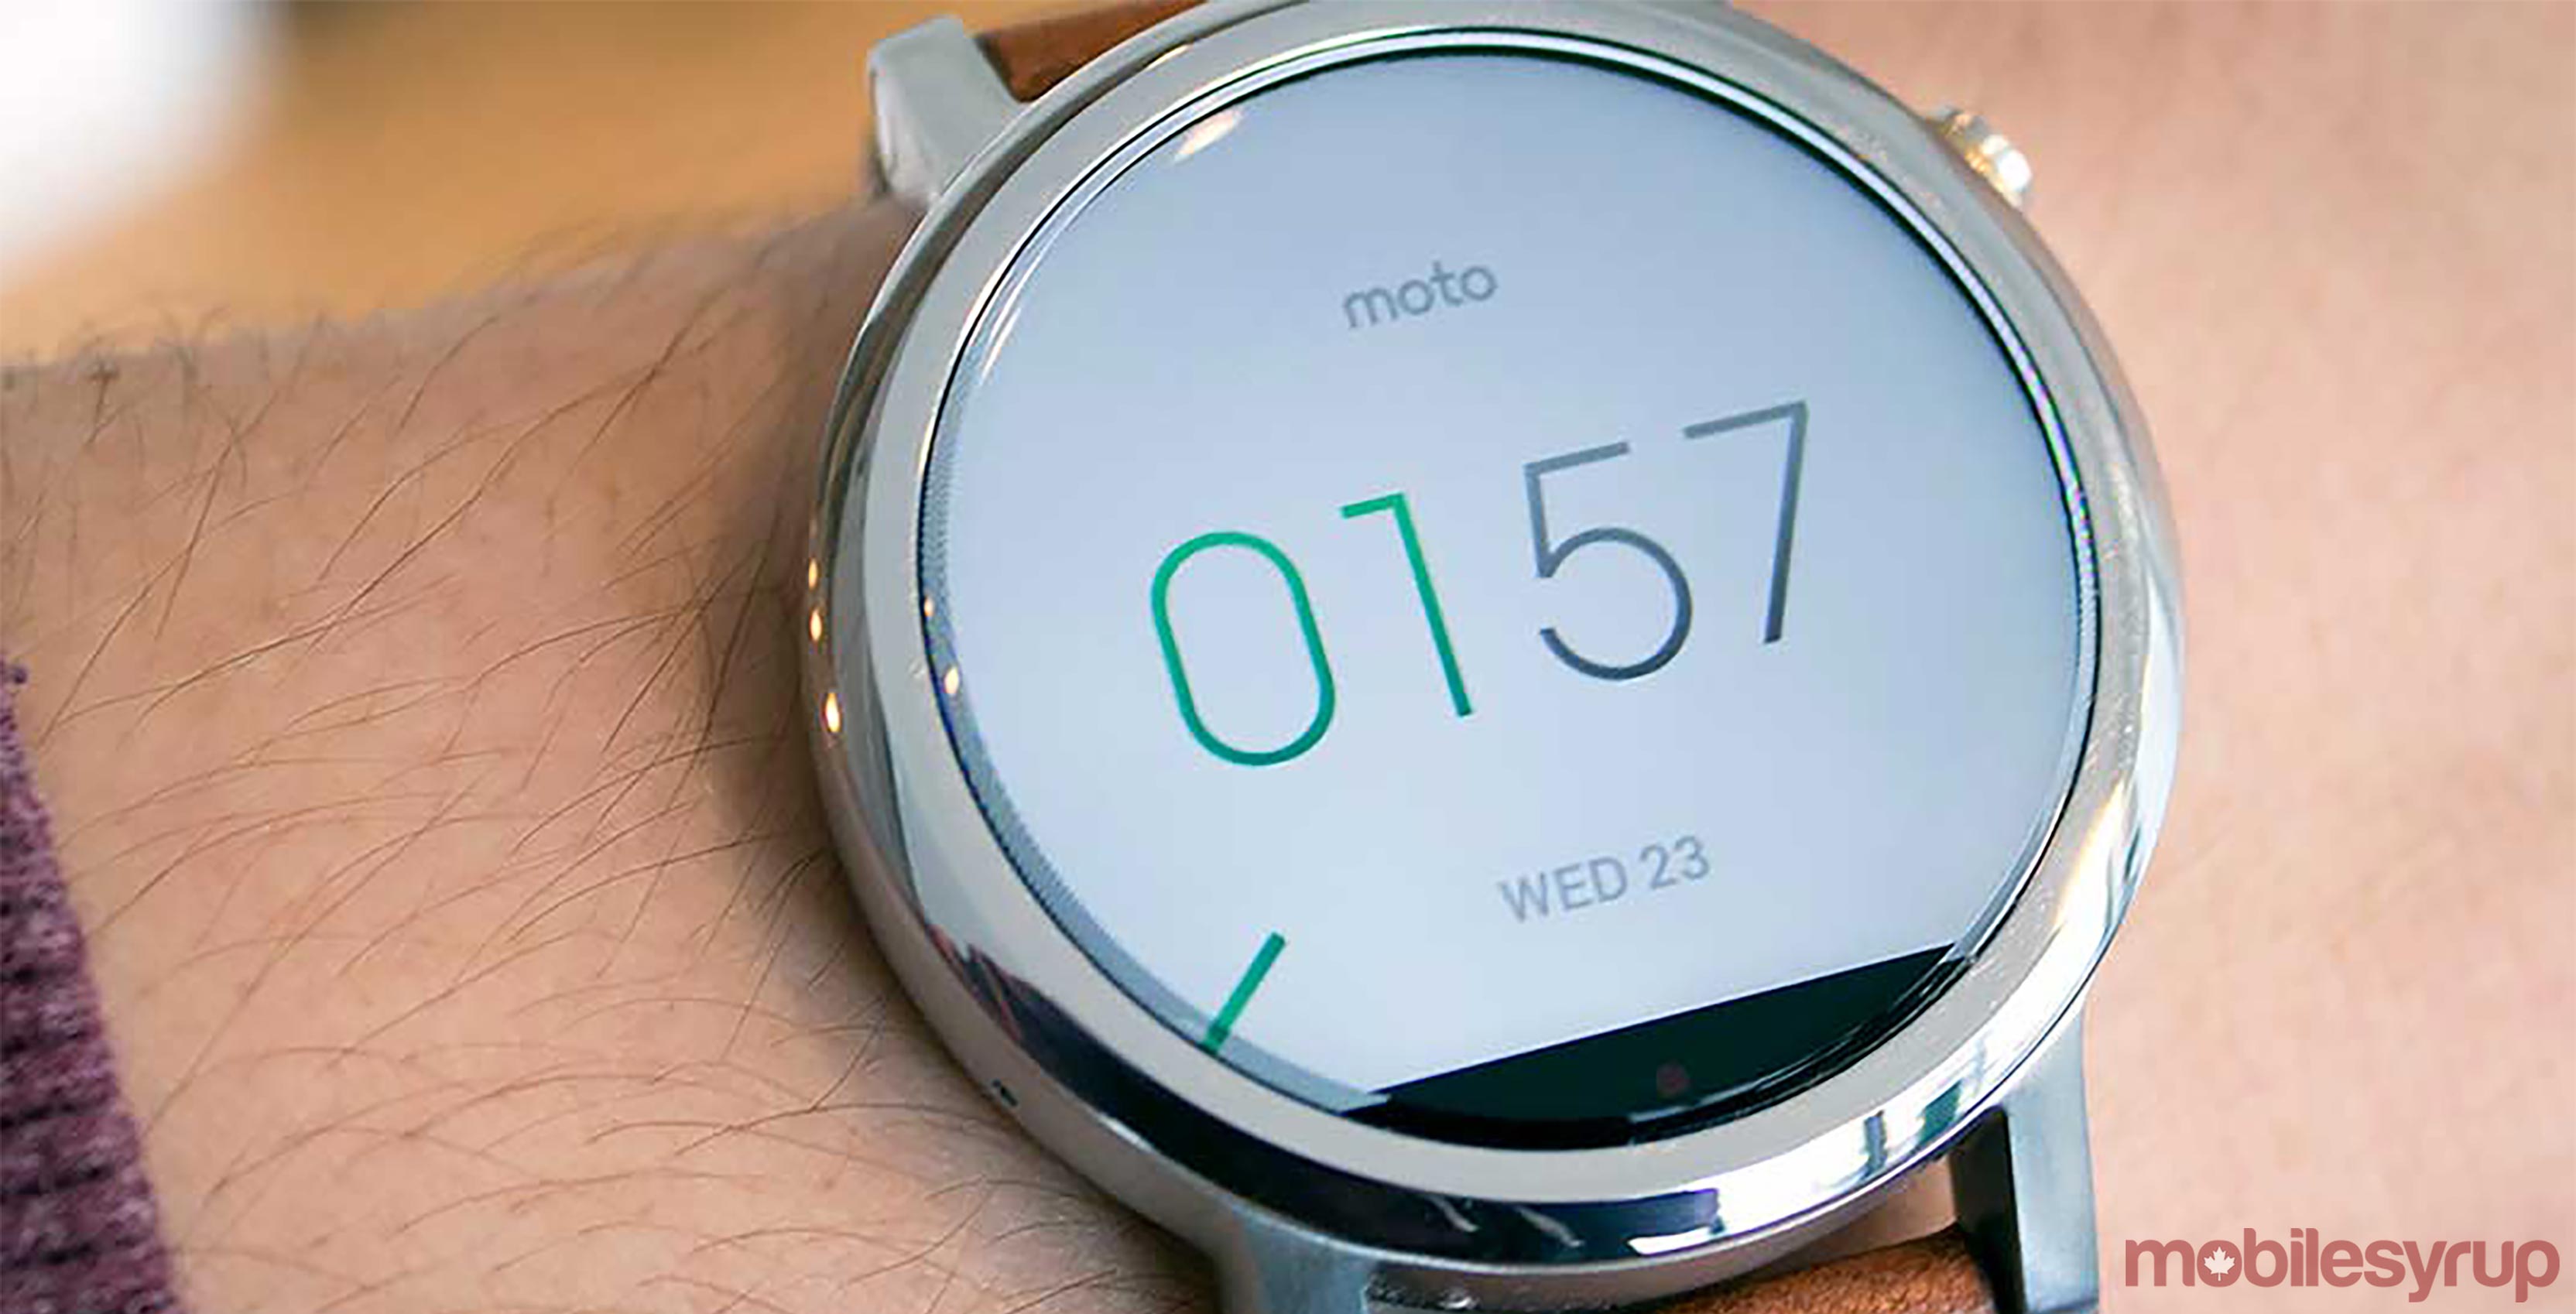 Moto 360 second generation smartwatch